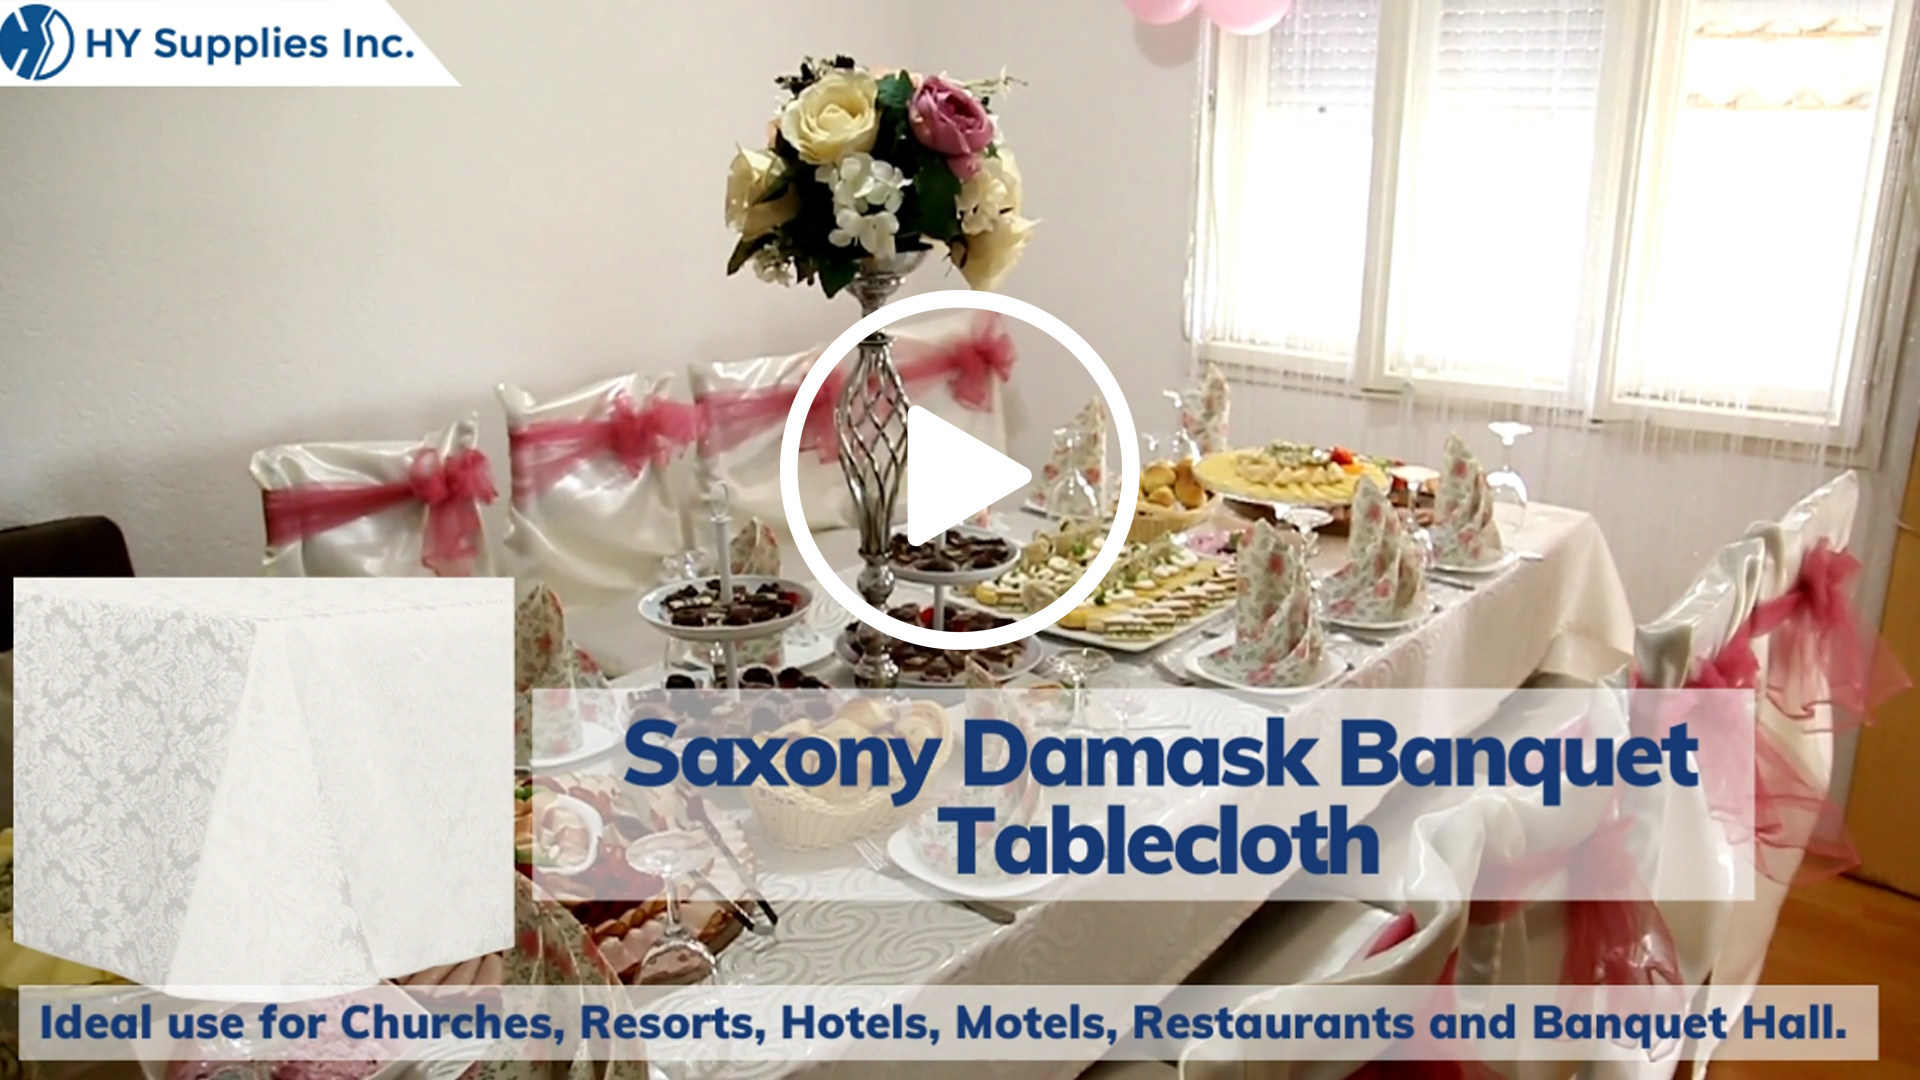 Somerset Damask Banquet Tablecloth